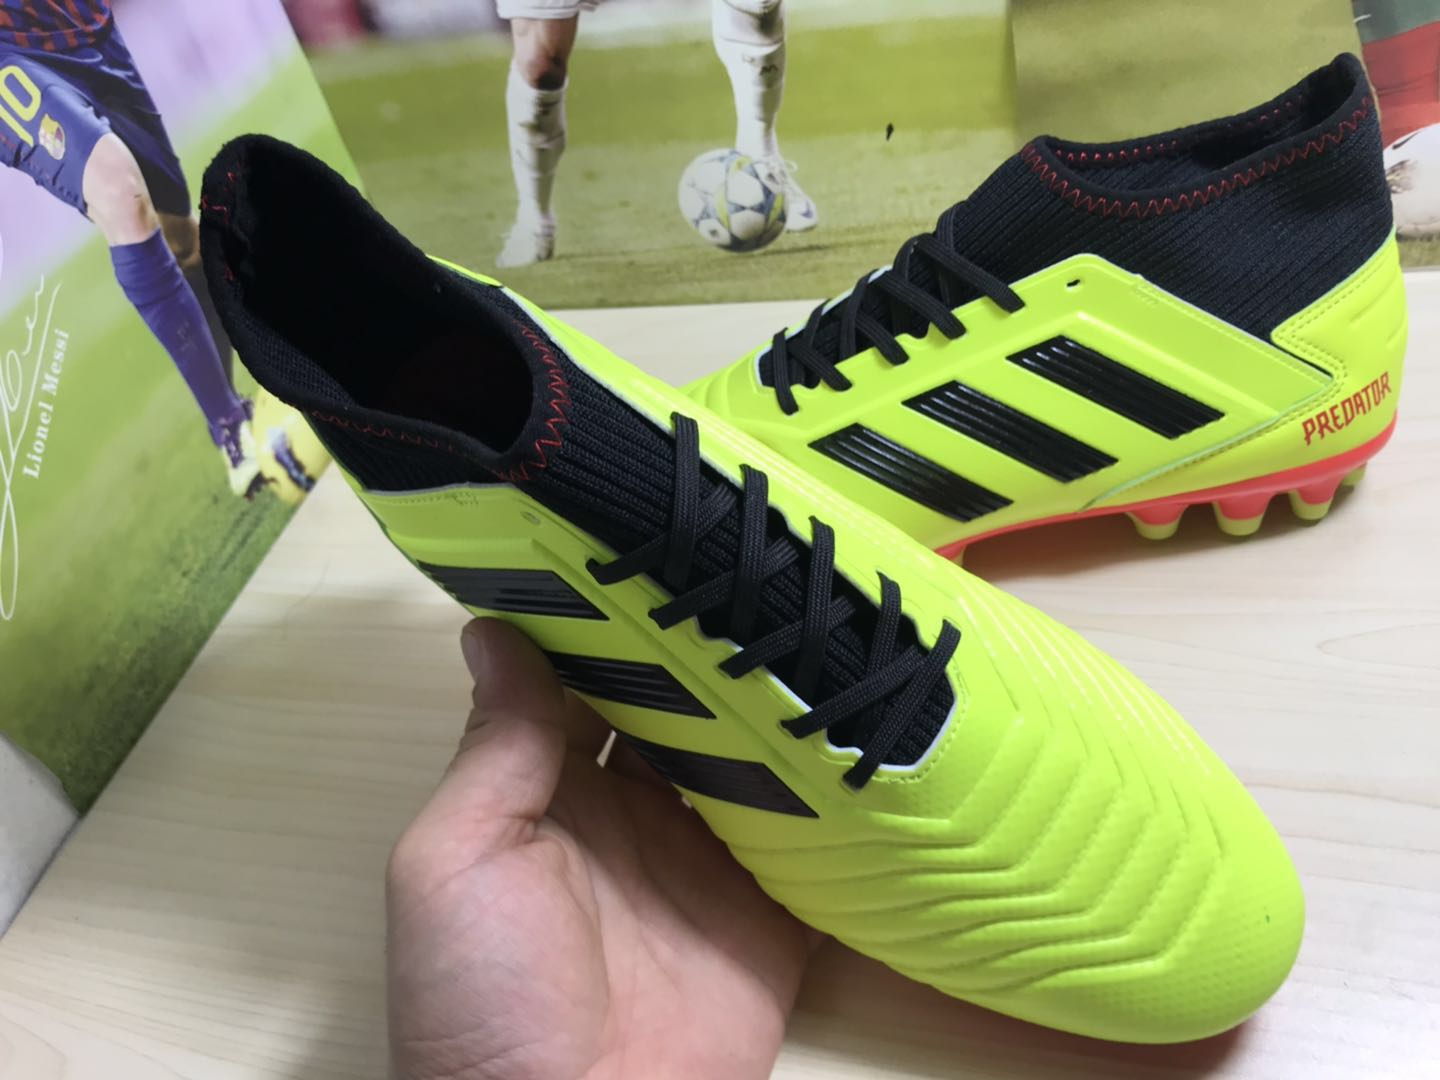 Adidas Predator 18.3 Ag J Football Shoes BB7748 - High Performance Footwear for Junior Players